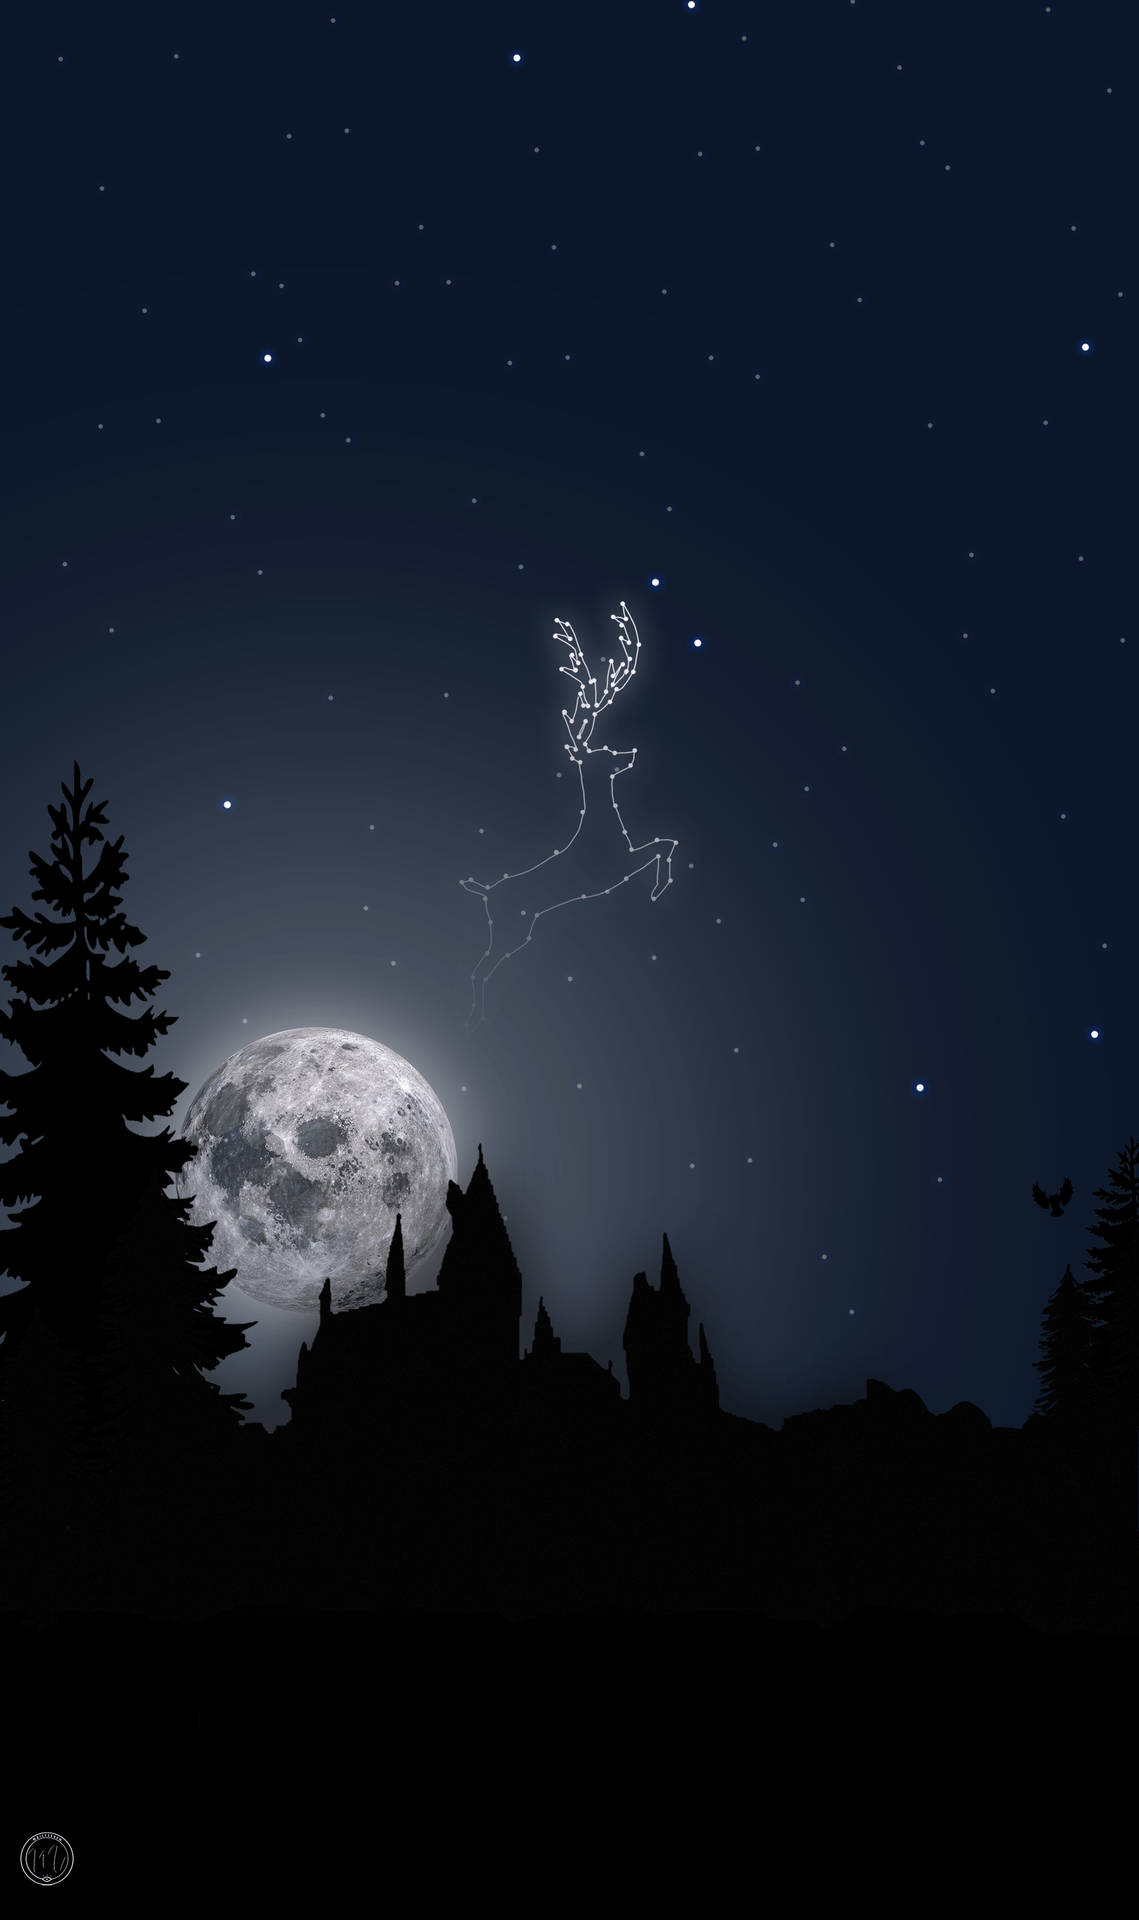 Holographic Winter Deer Live Wallpaper - free download